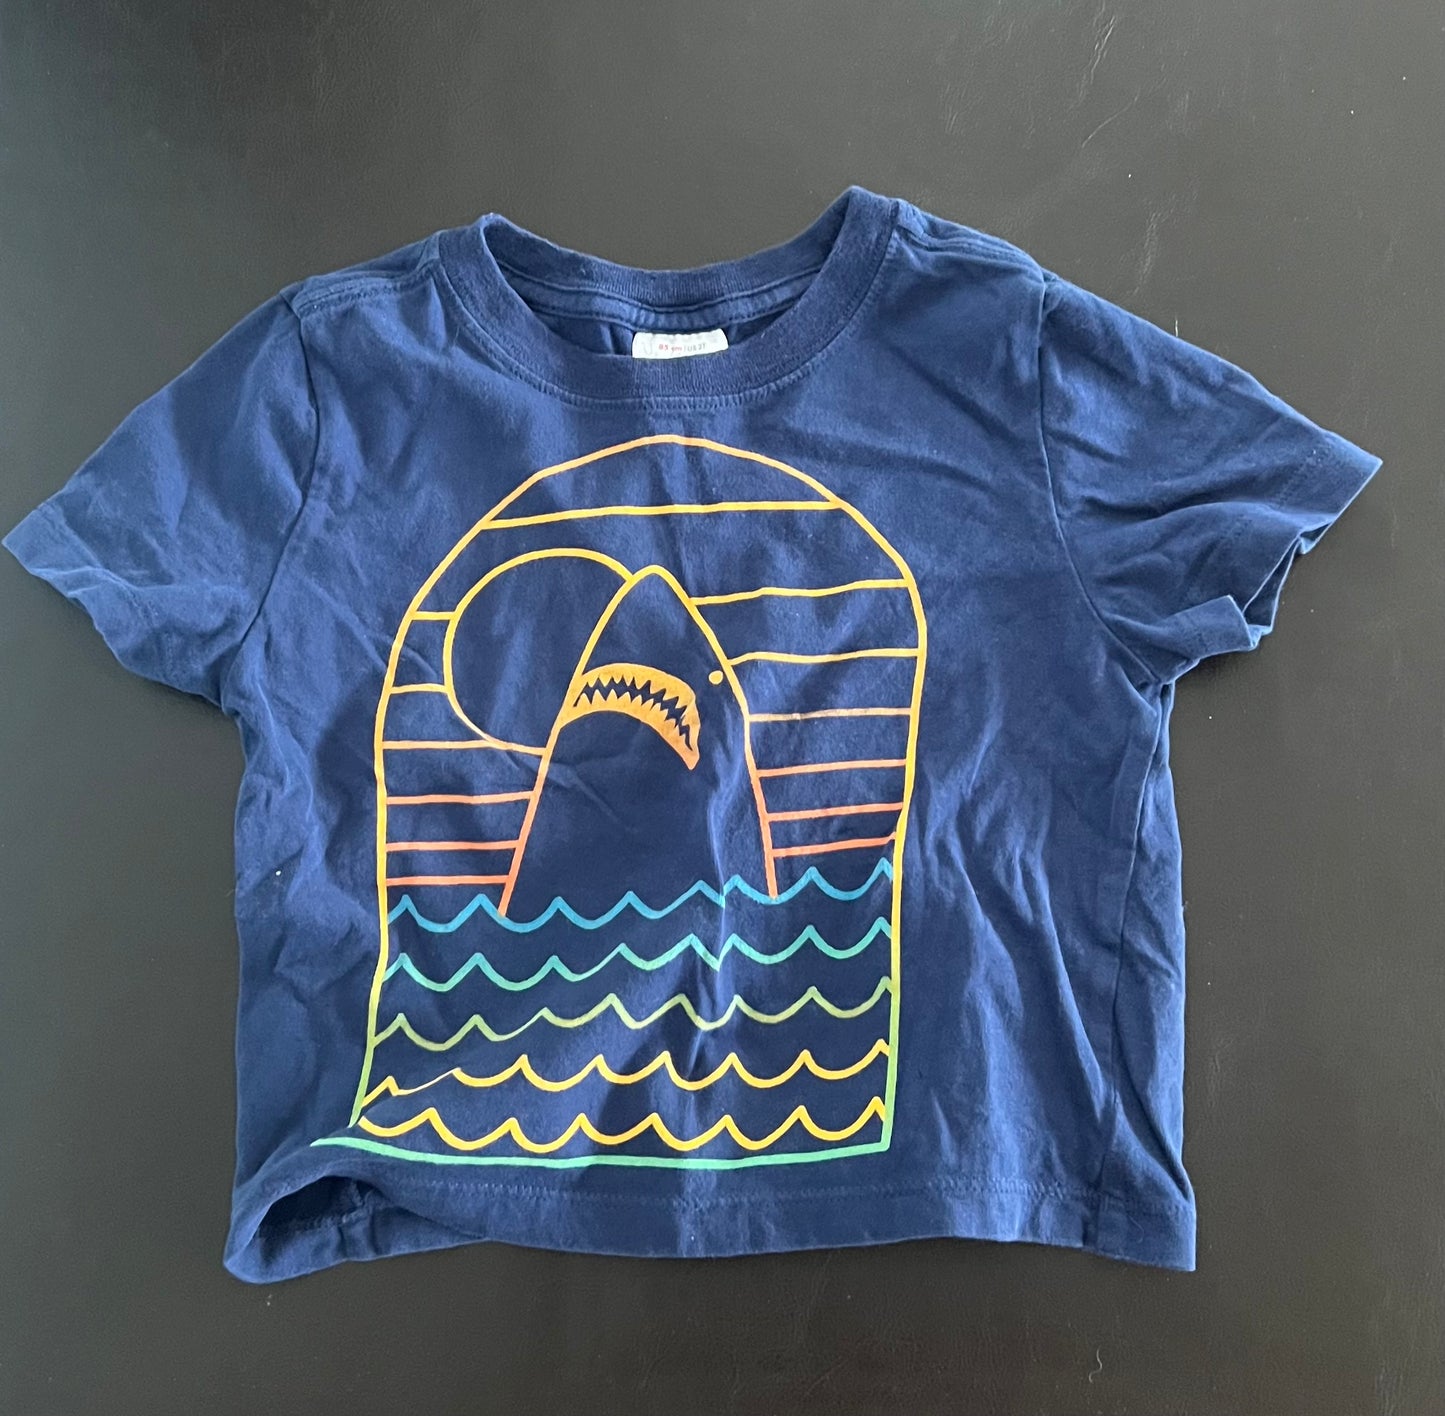 Hanna Andersson Navy Shark Shirt 2T